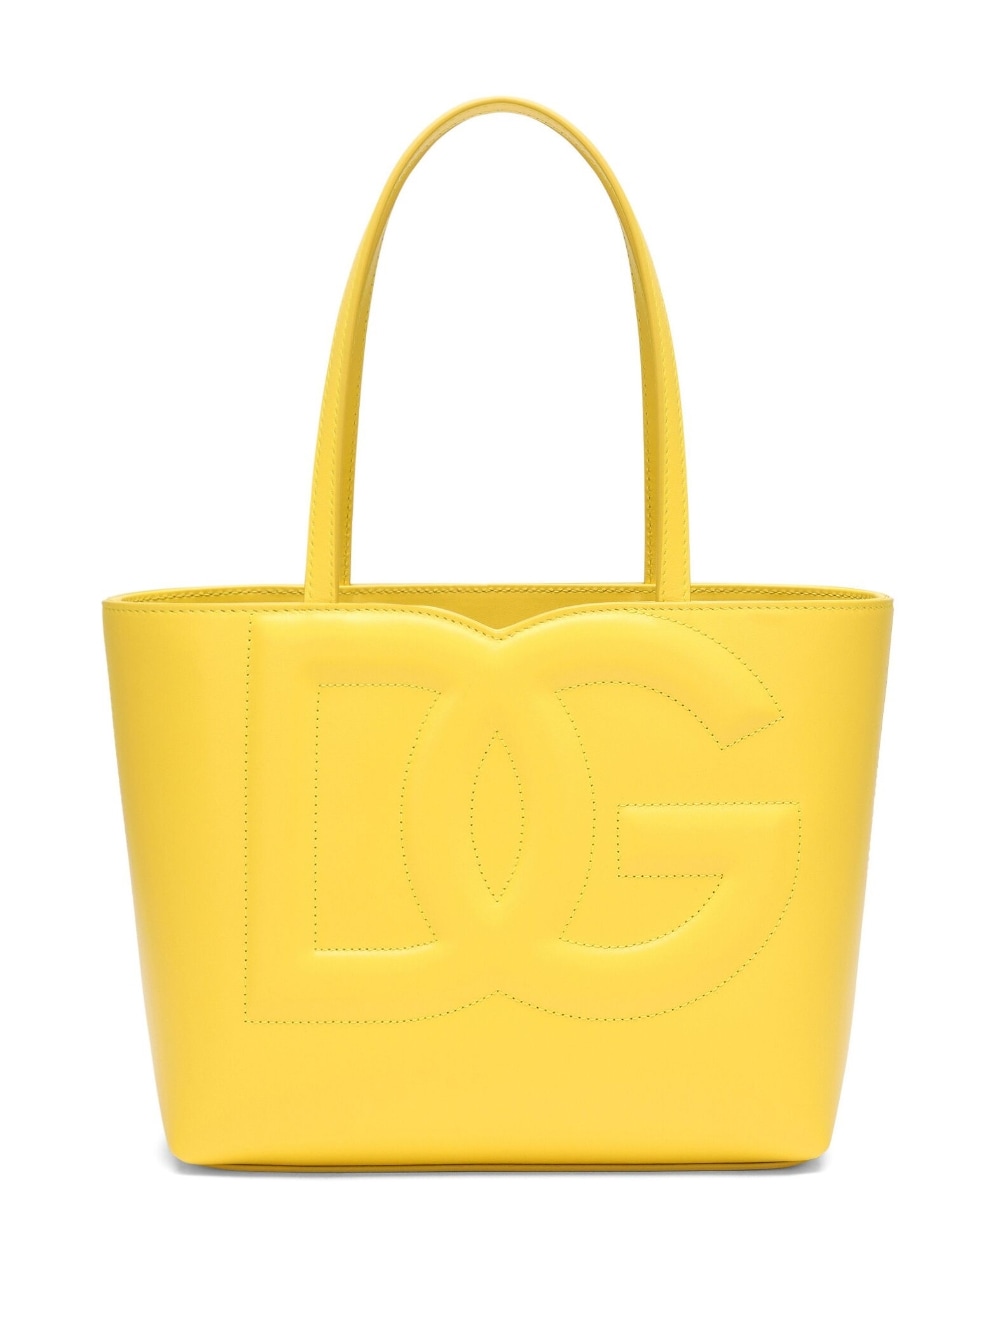 DG logo bag